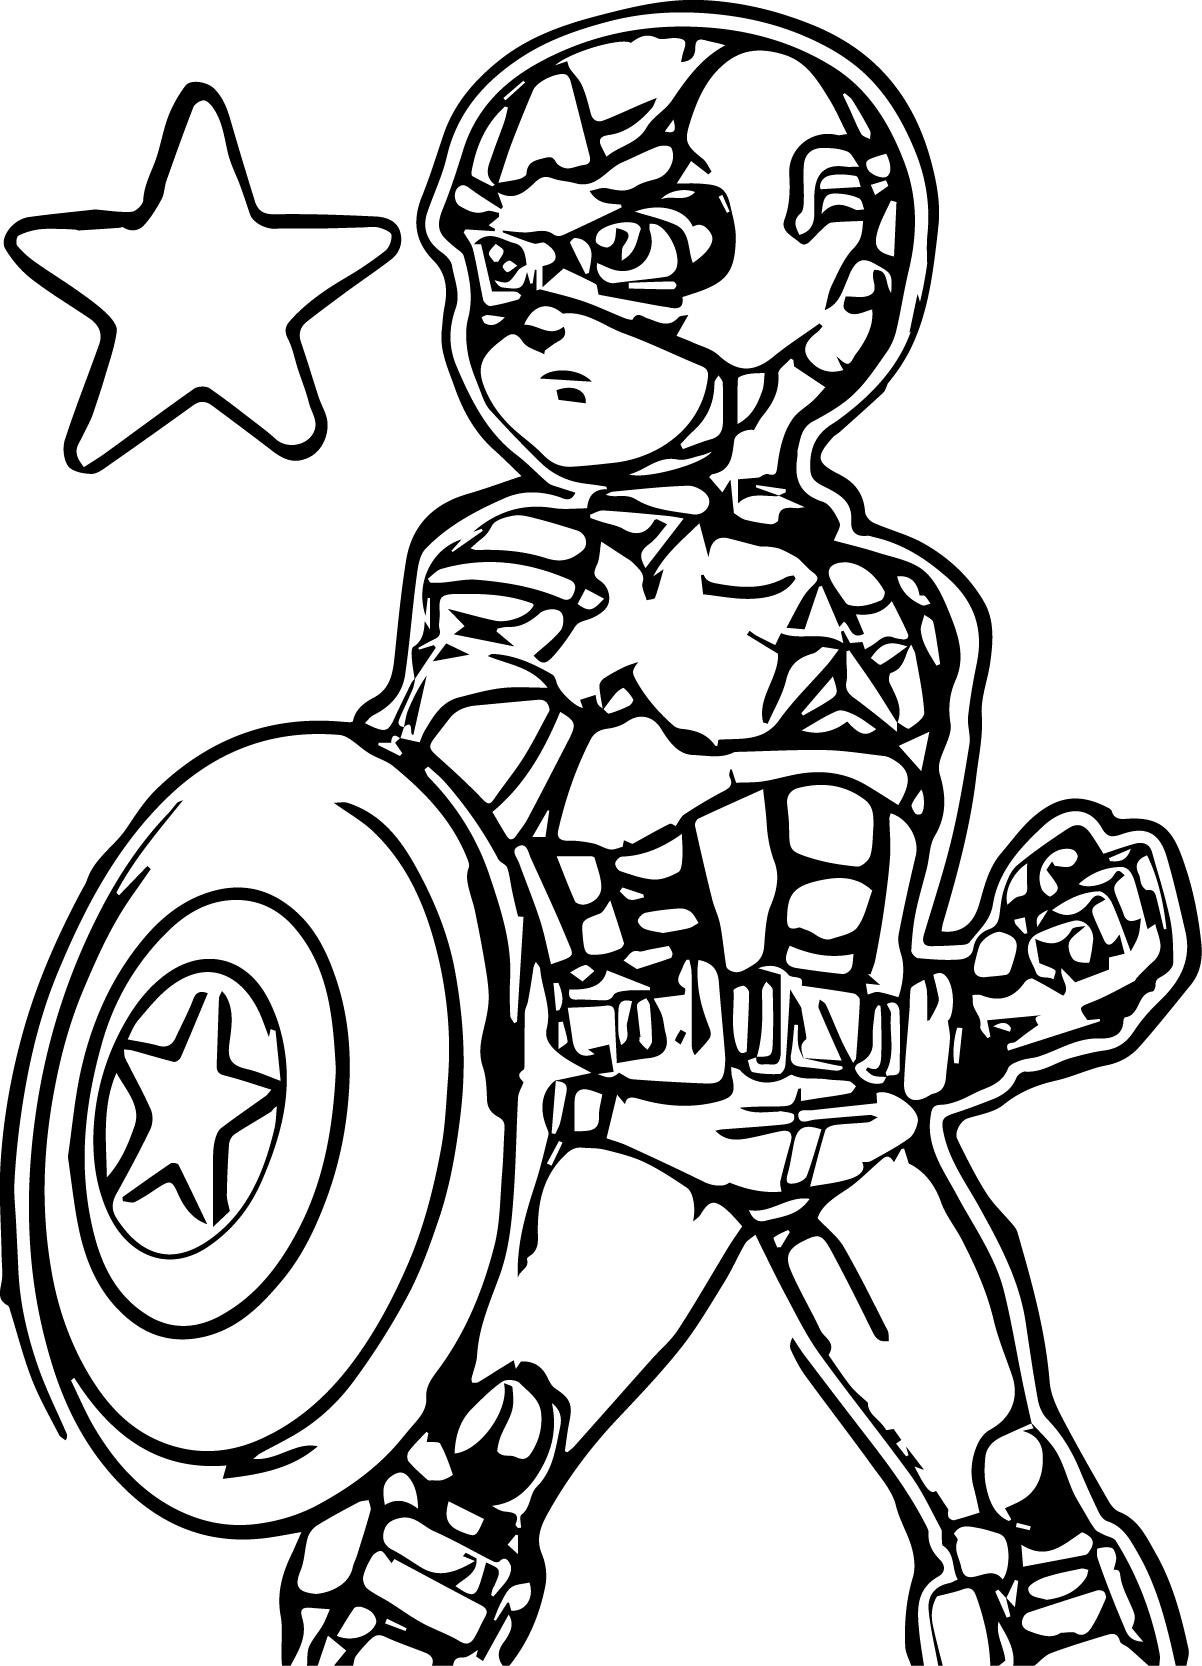 Coloriage Captain America marvel super heros 